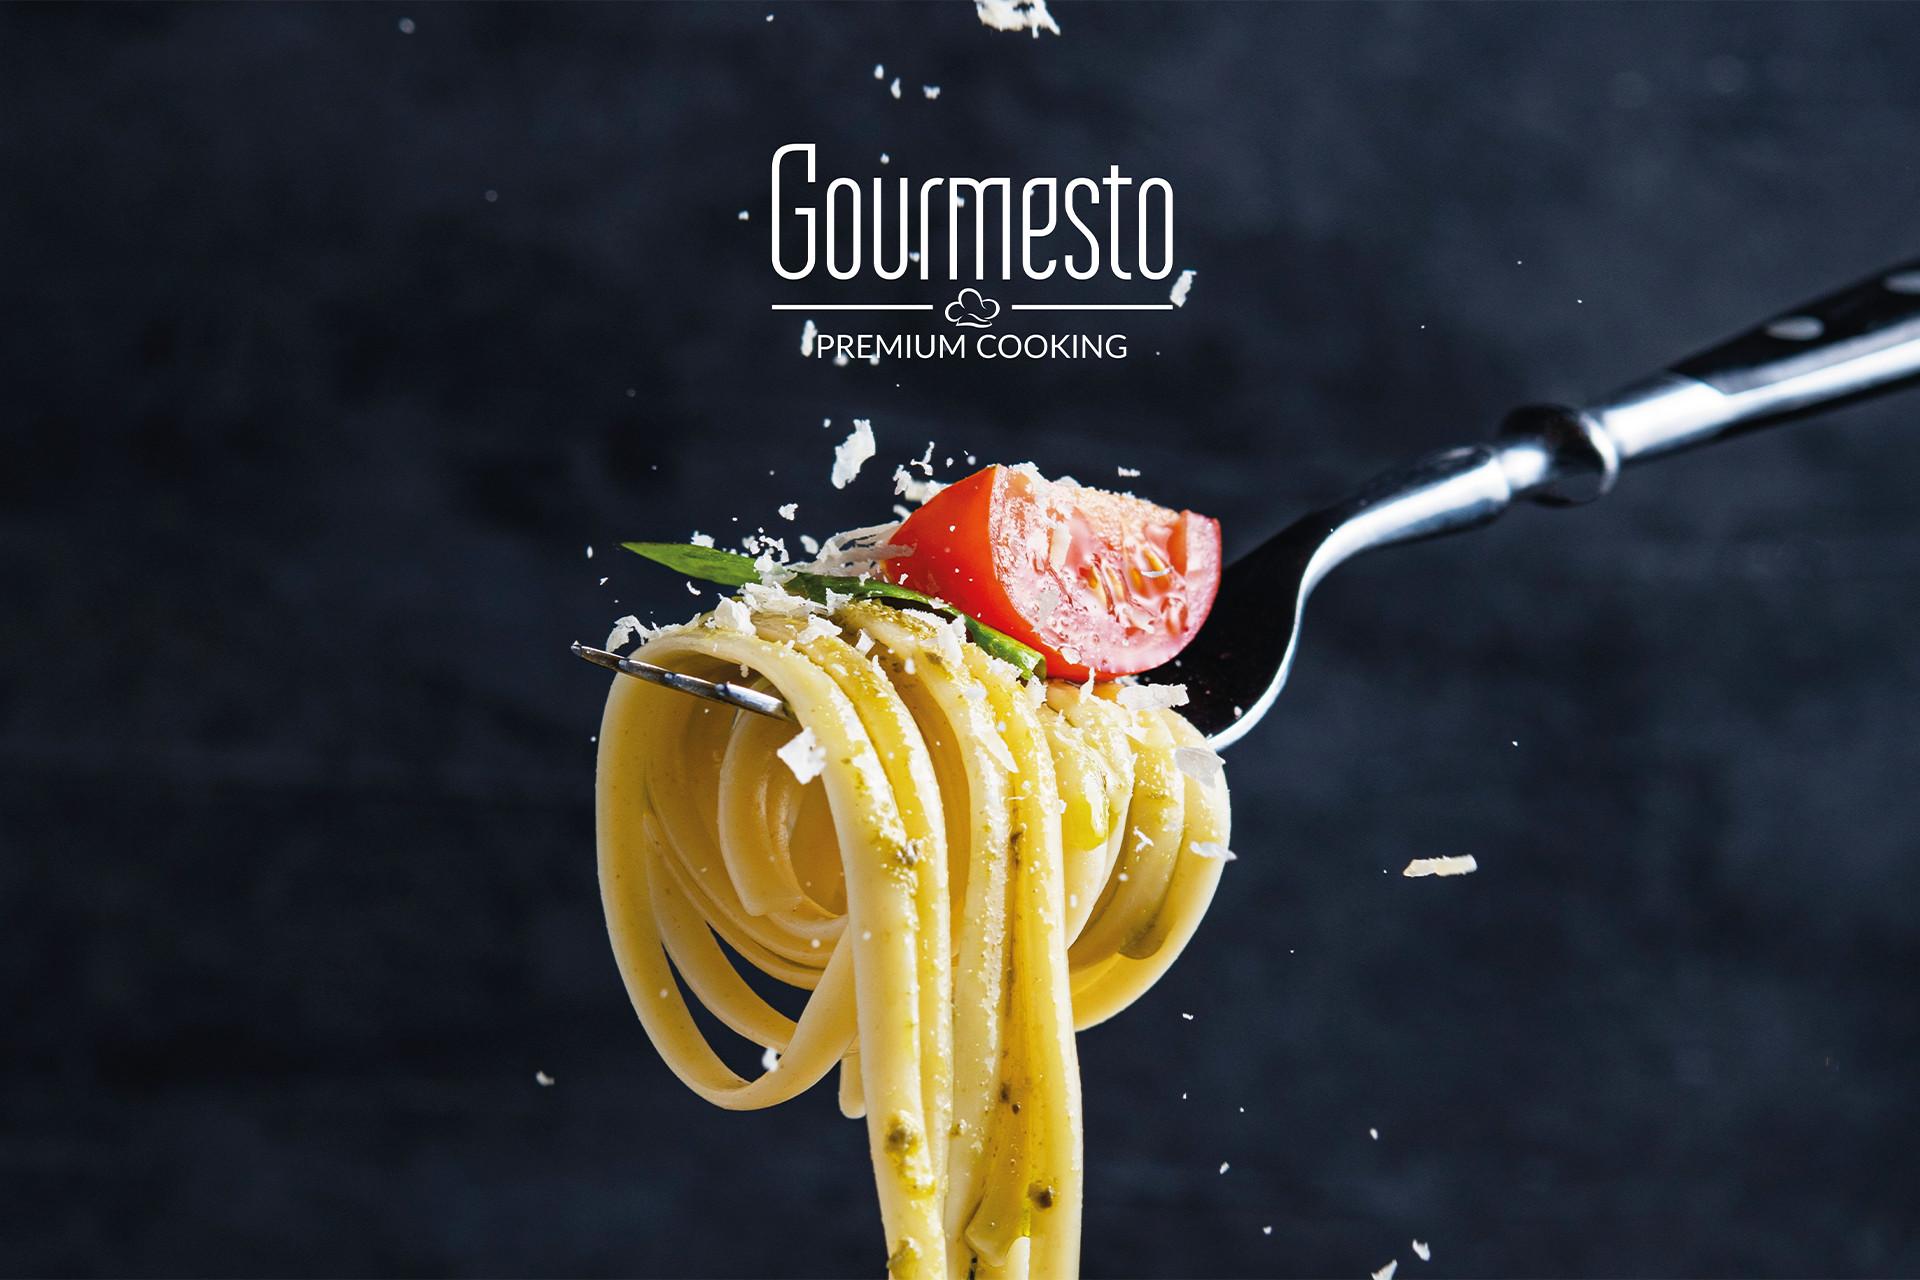 teaser_gourmesto.png